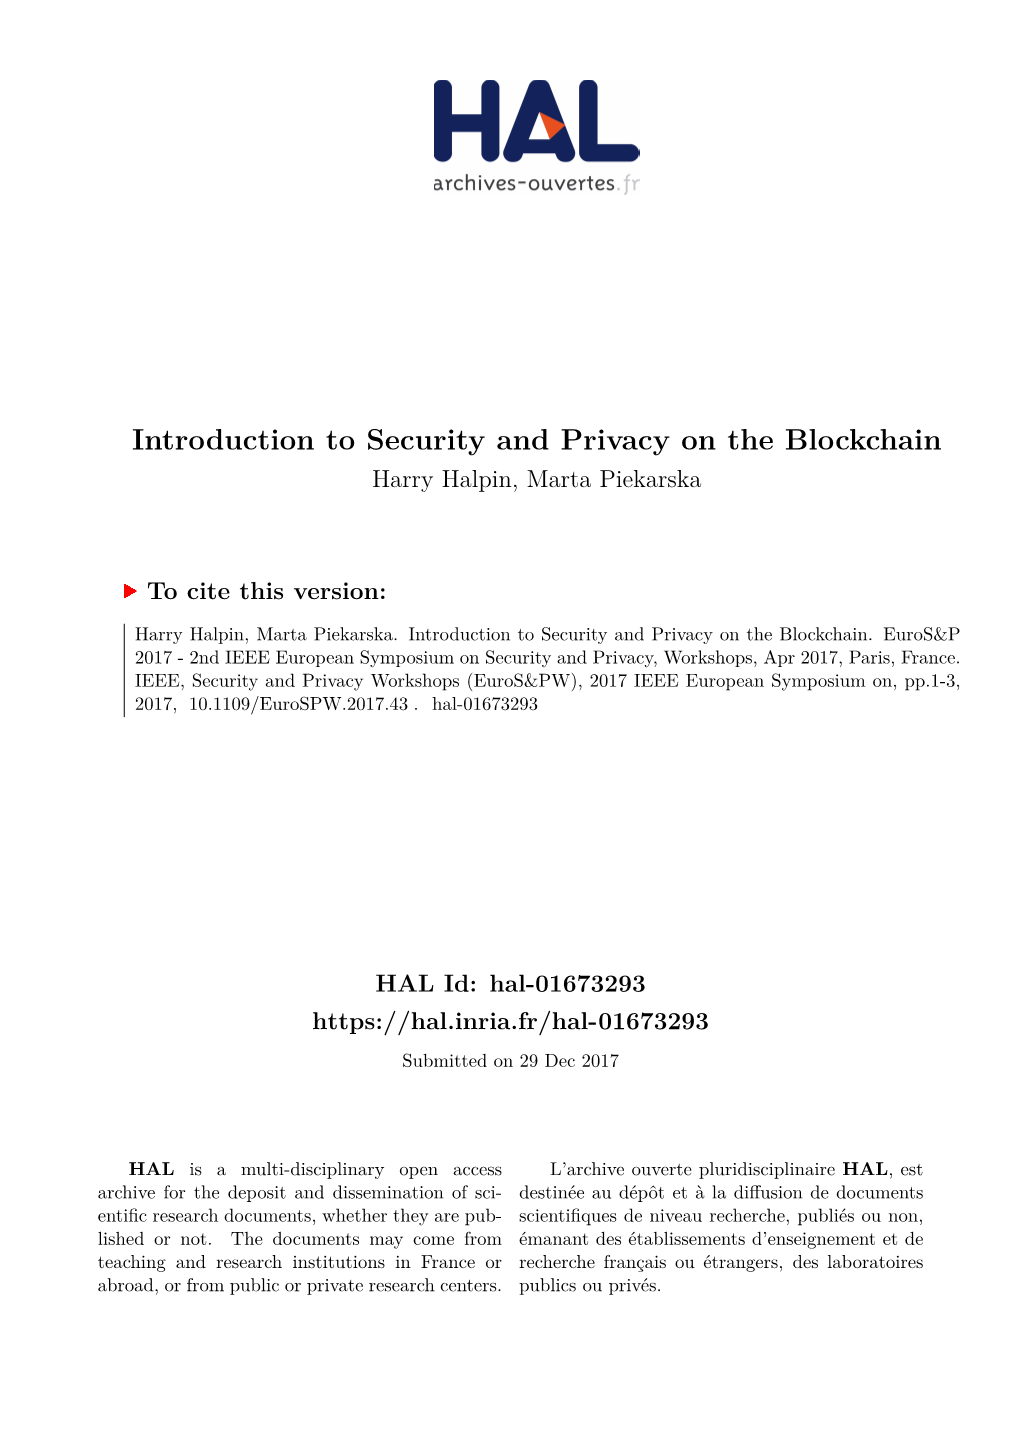 Introduction to Security and Privacy on the Blockchain Harry Halpin, Marta Piekarska